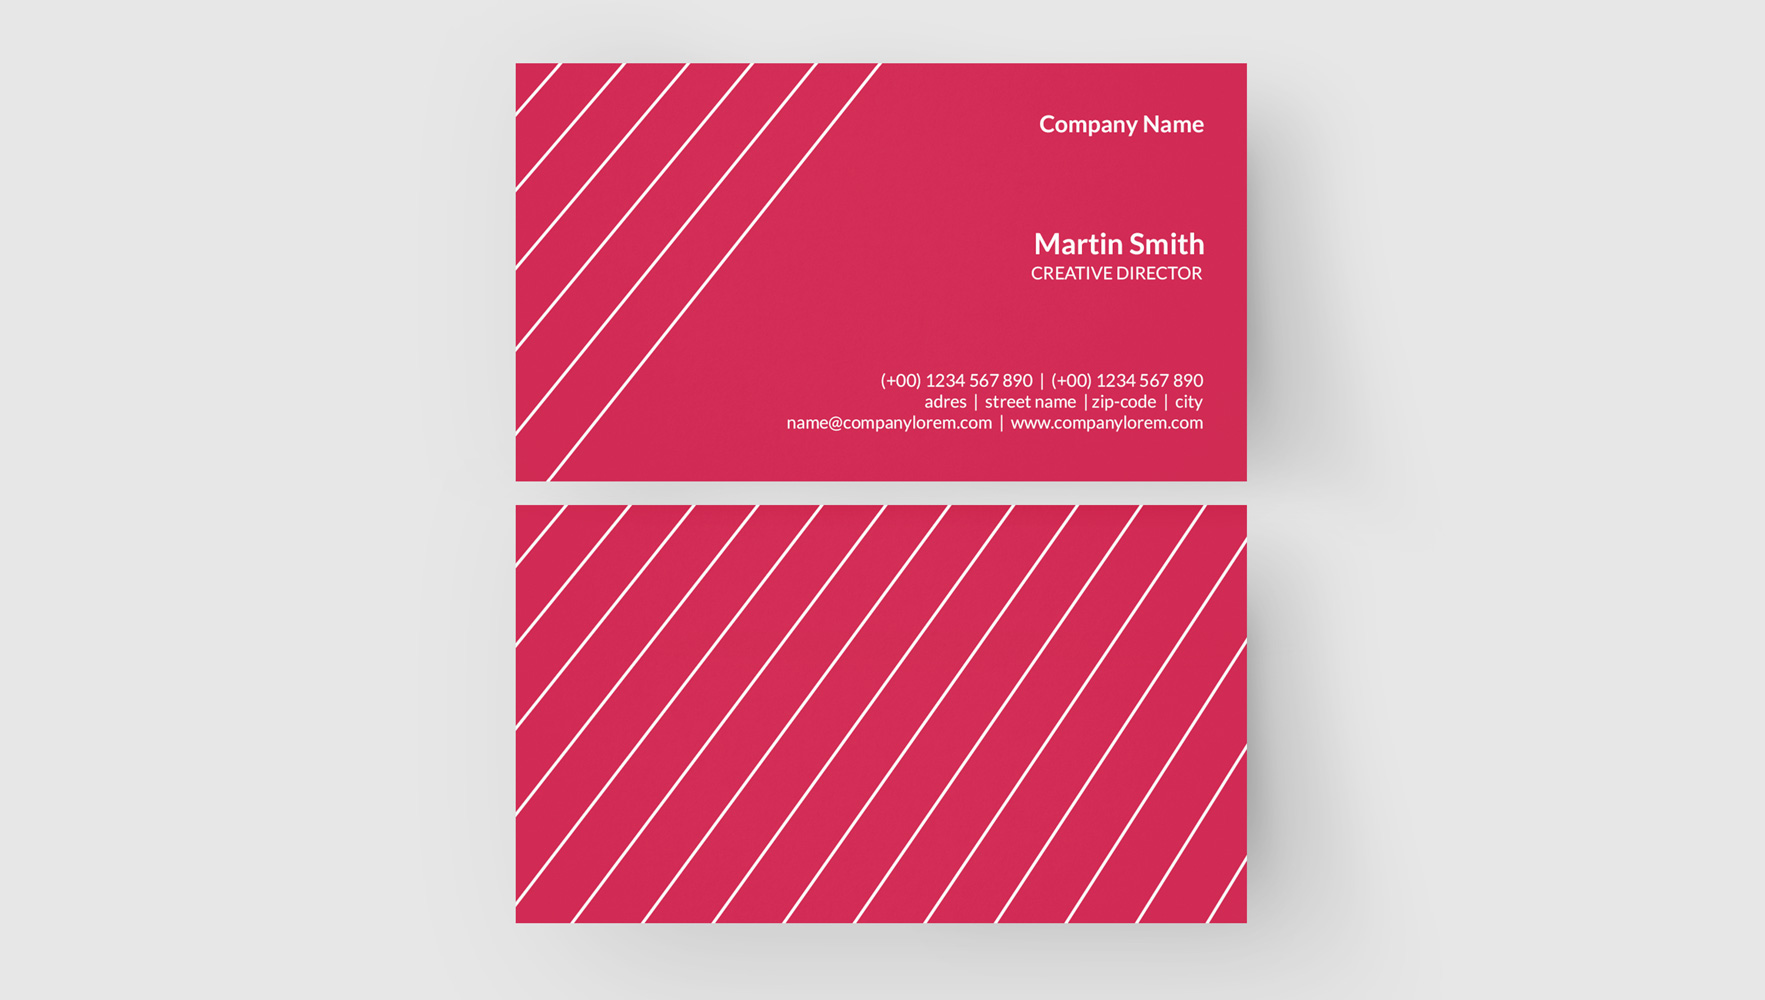 business-card-template-coreldraw-alfaera-coreldraw-graphic-design